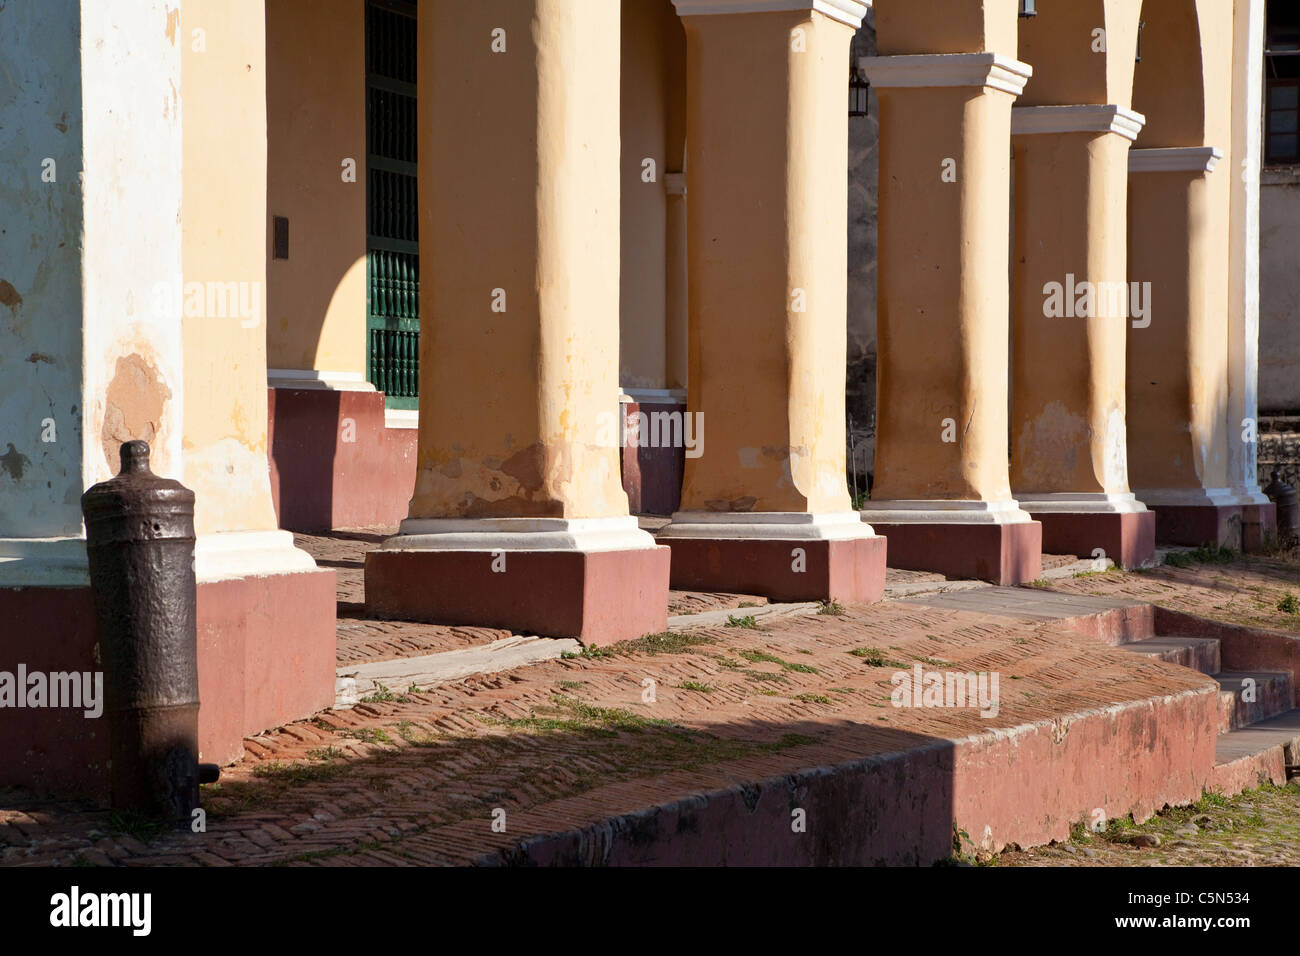 Cuba, Trinidad. Columns in front of the Palacio Brunet. Stock Photo